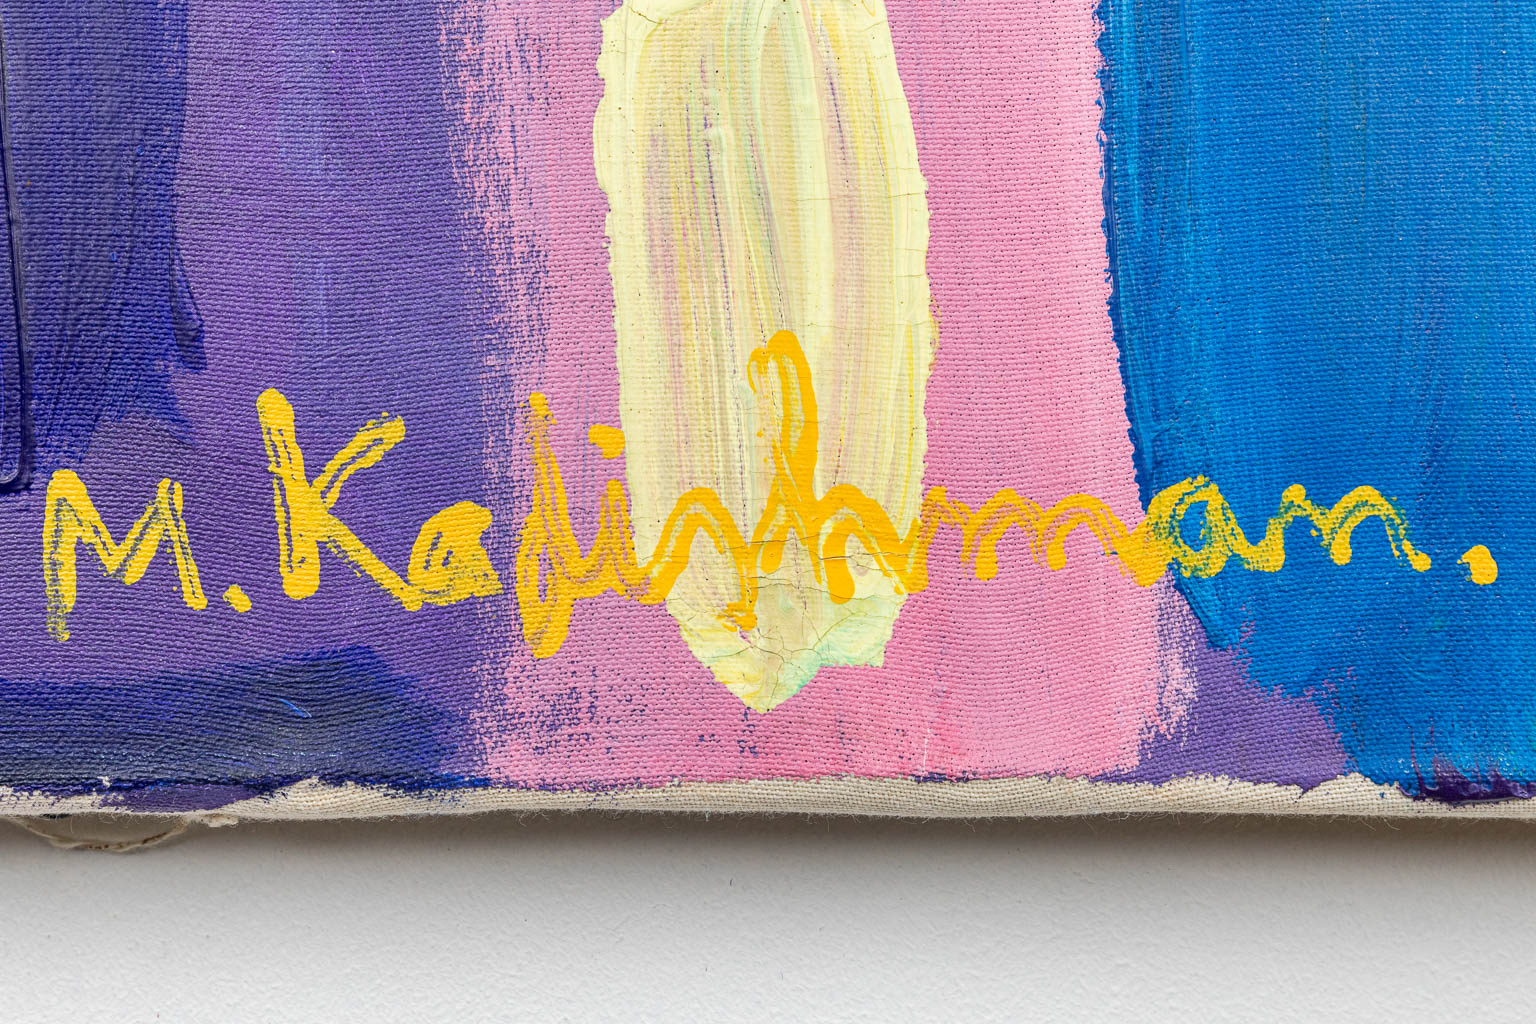 Menashe KADISHMAN (1932-2015) 'Sheep' an abstract painting, painting oil on canvas. (60 x 80 cm)